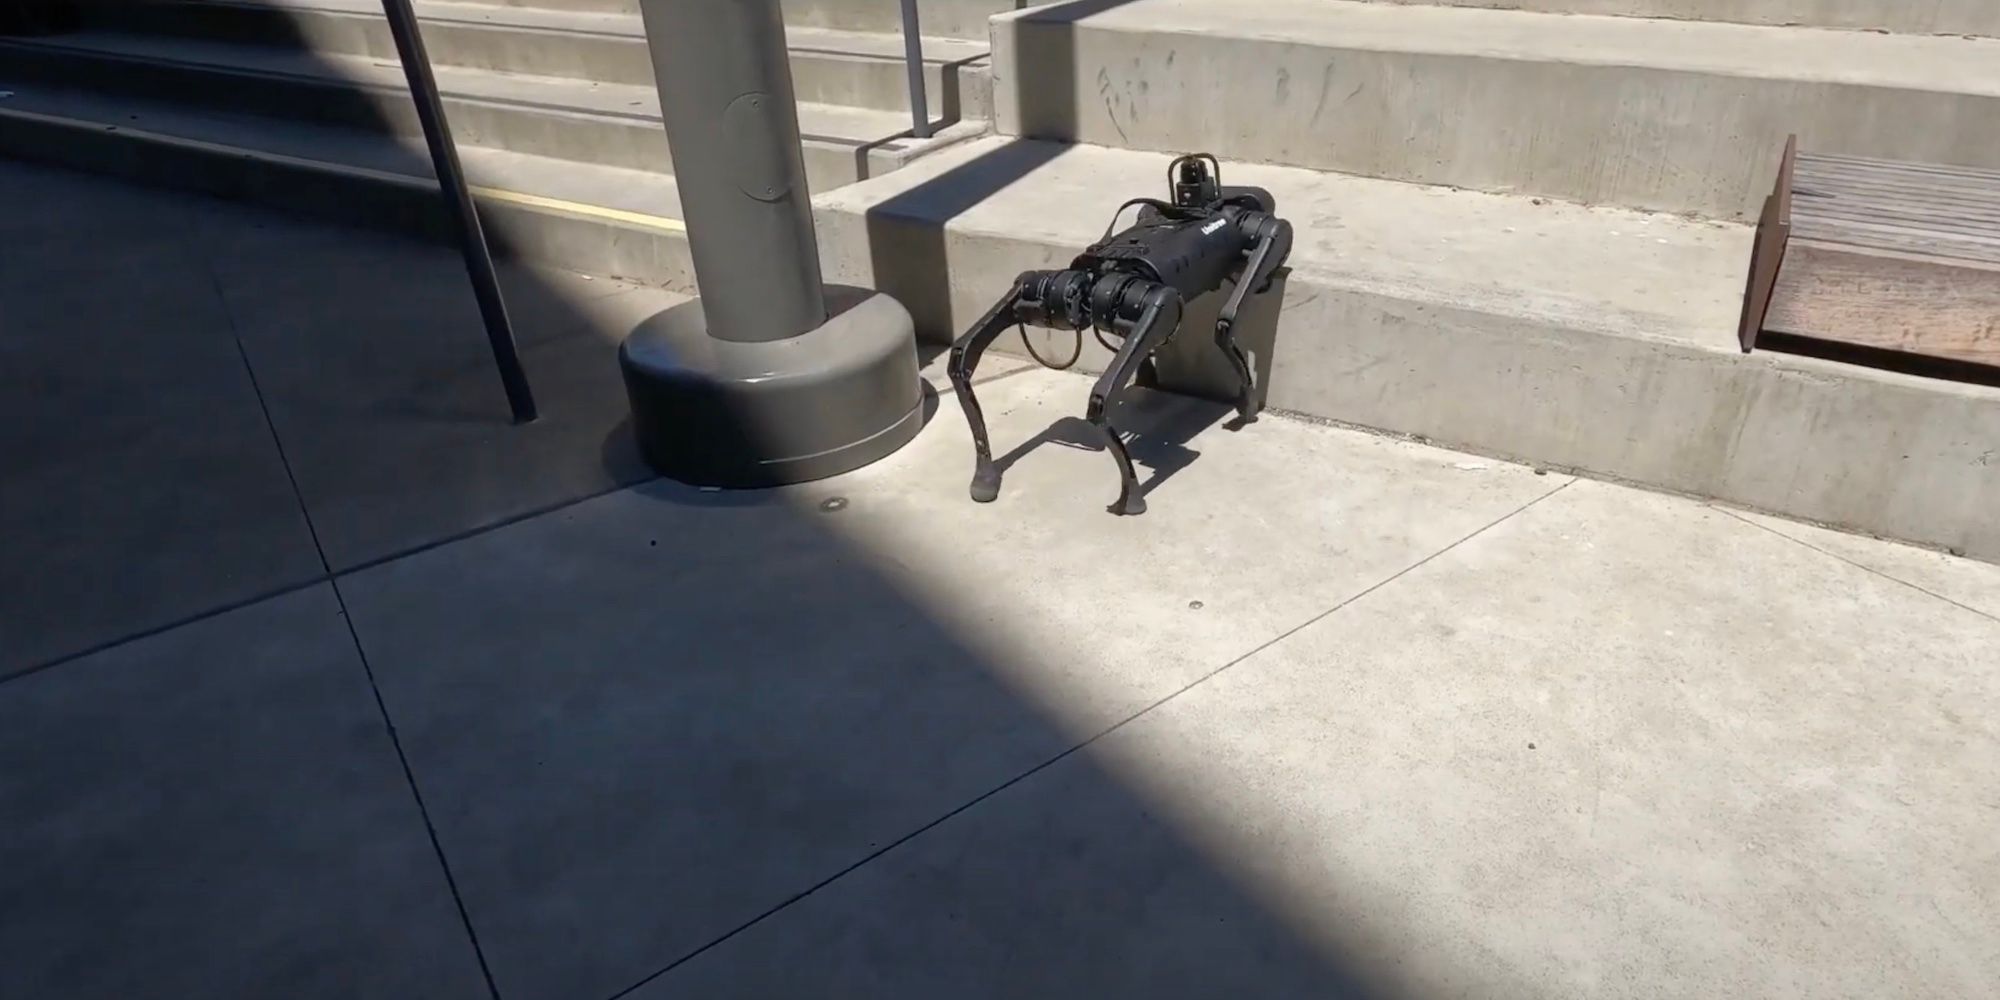 Carnegie Mellon's Robot Dog climbing stairs